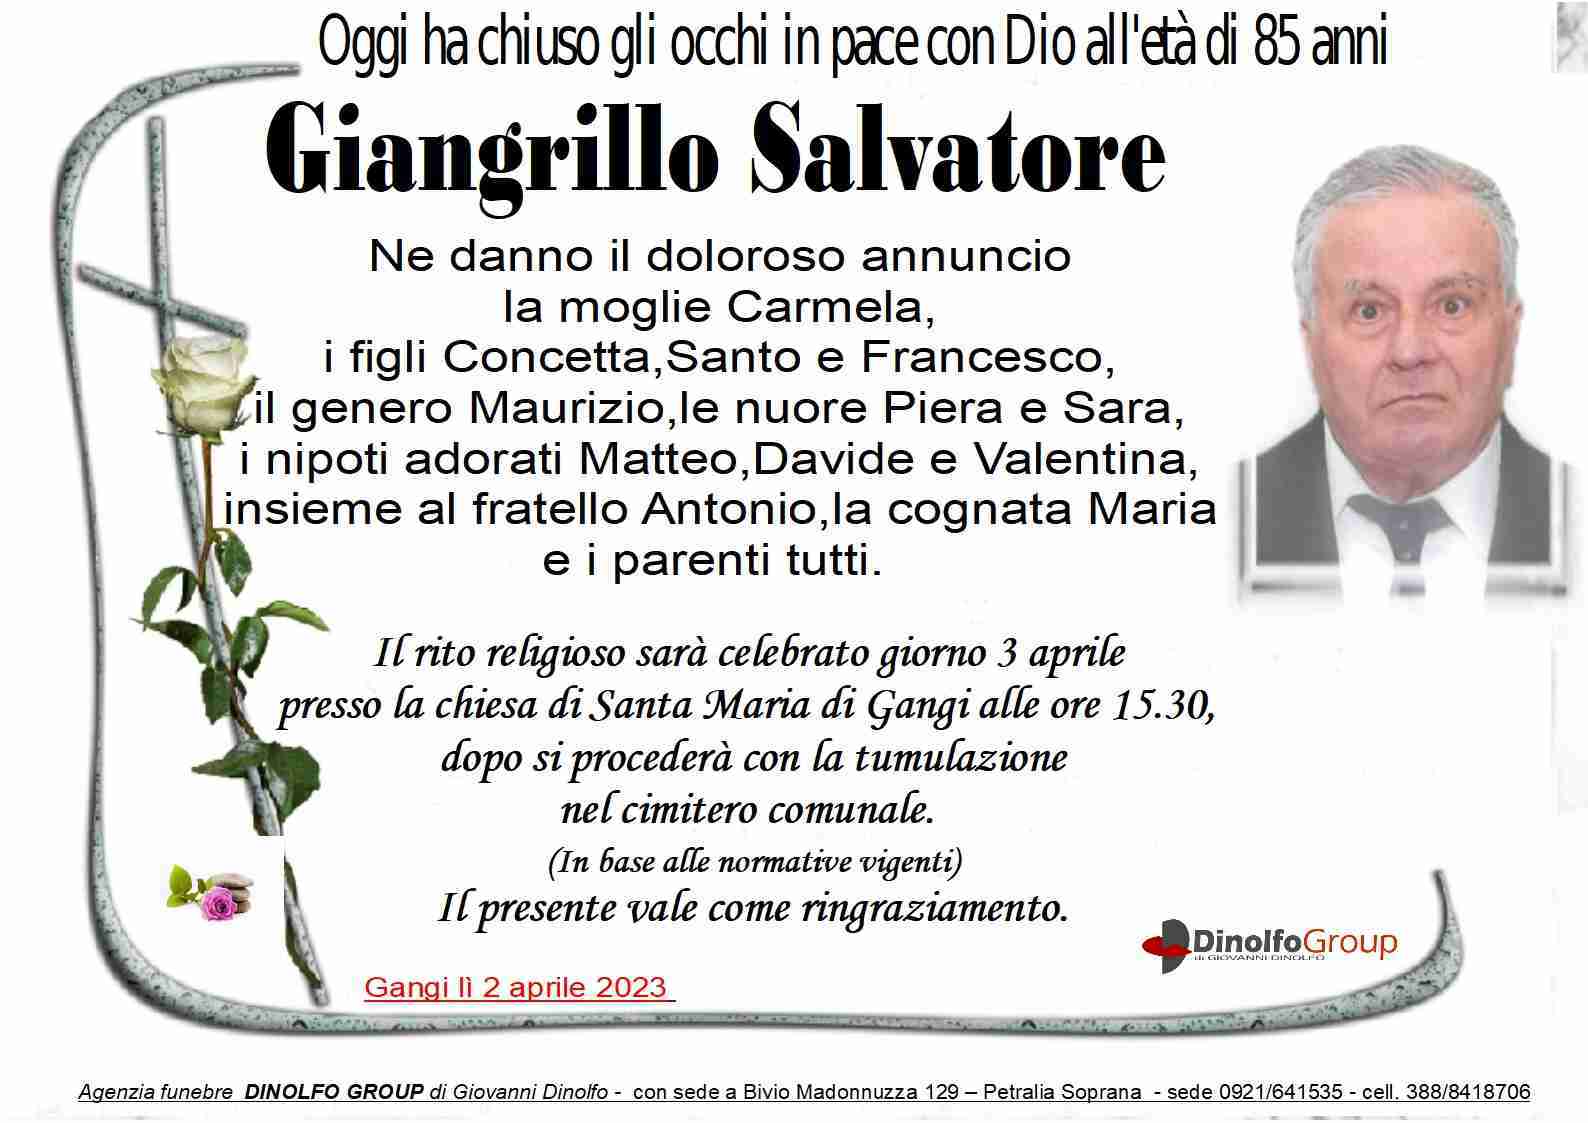 Salvatore Giangrillo